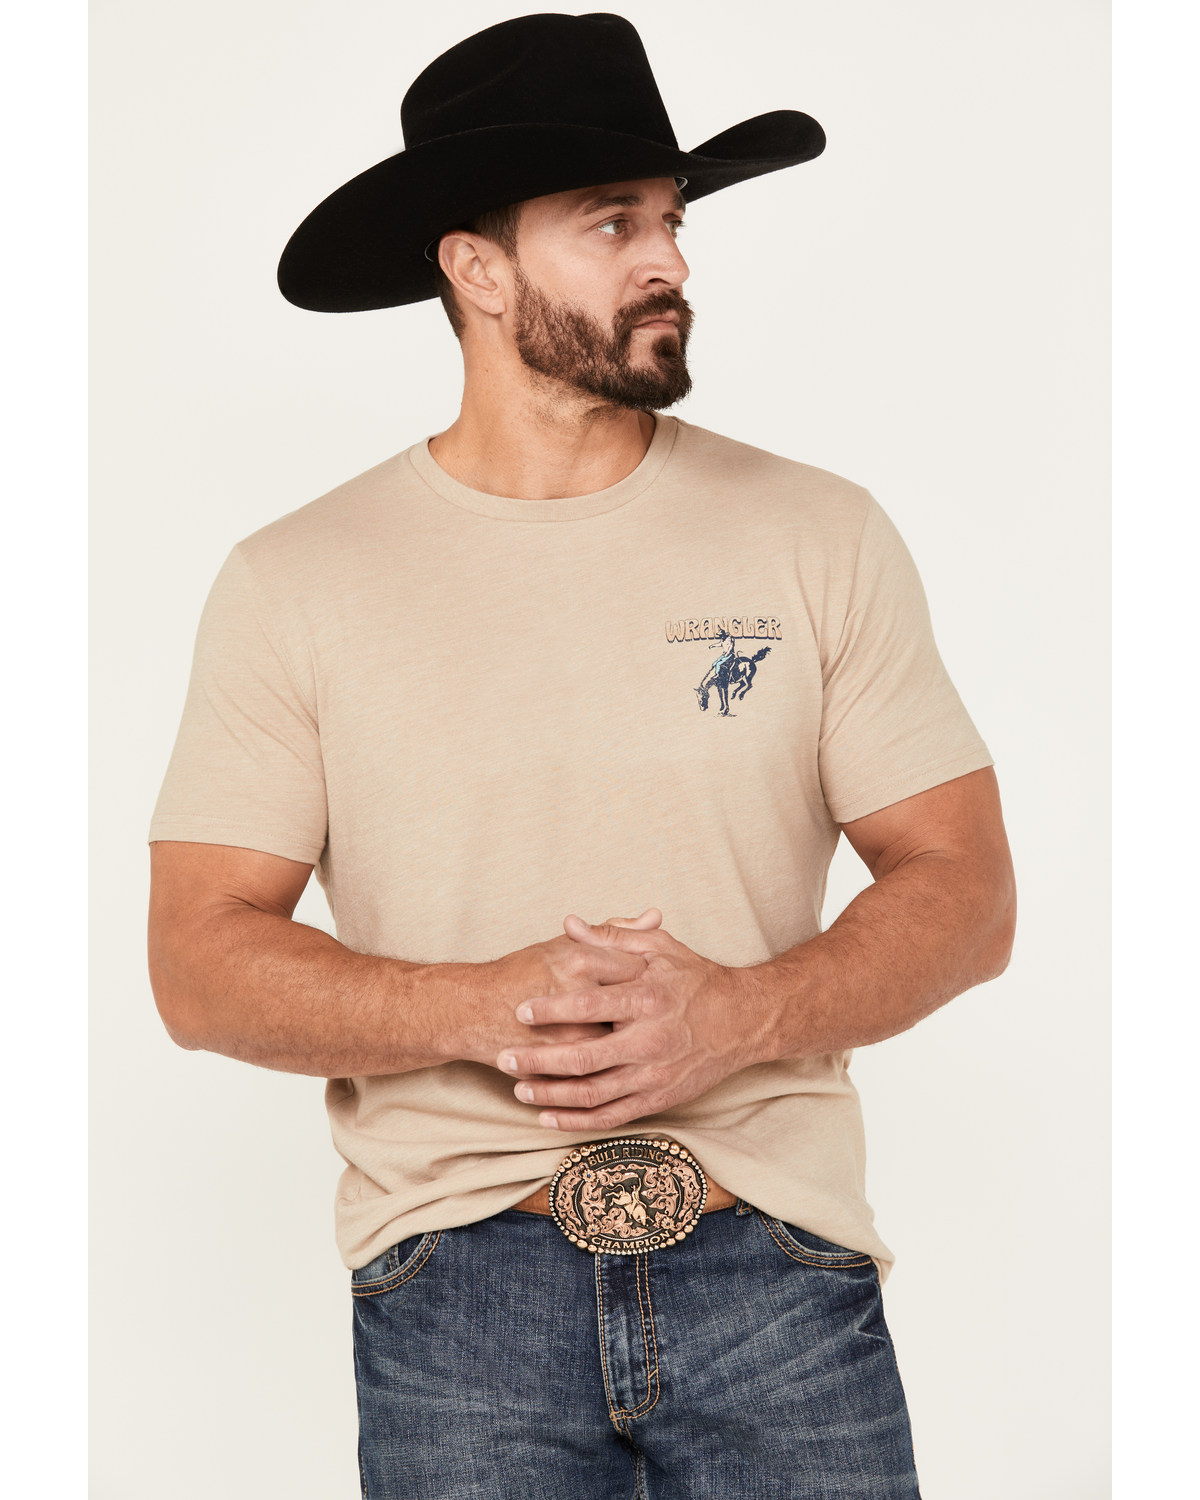 Wrangler Men's Bucking Horse and Logo Short Sleeve Graphic T-Shirt